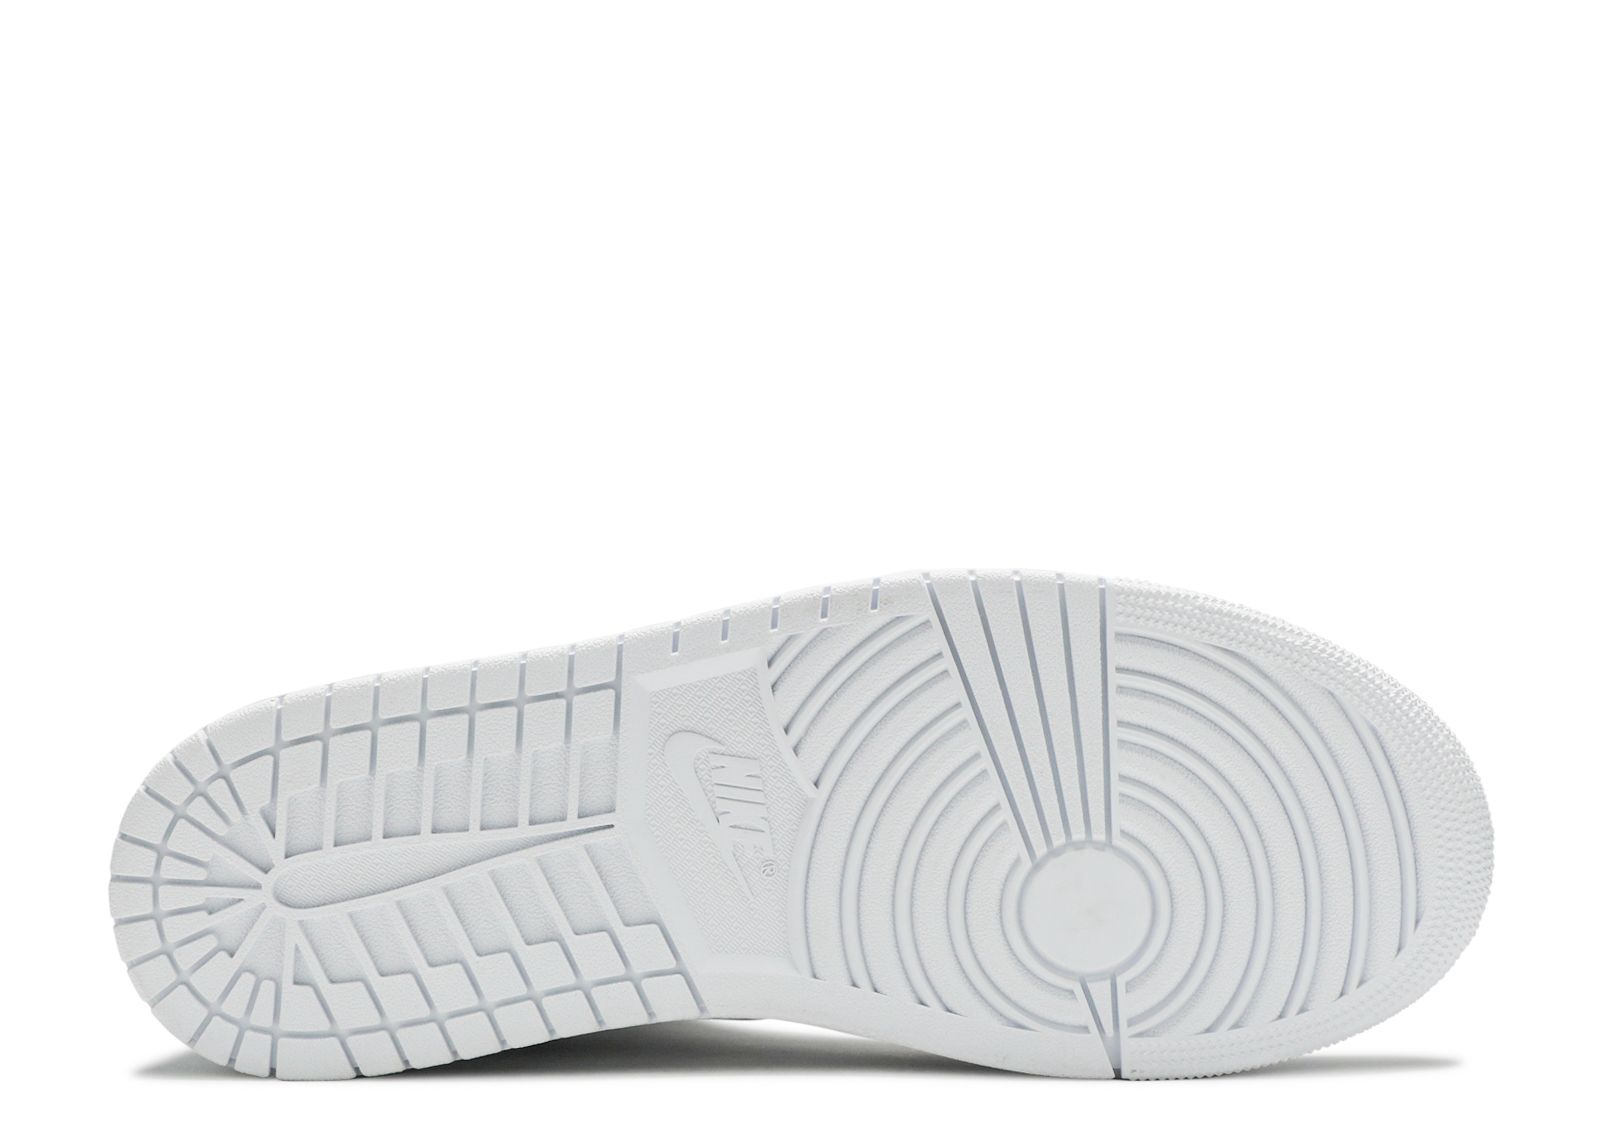 Nike Air Jordan 1 Mid Triple White Shoes 554724-130 554725-130 GS  Men's Sizes